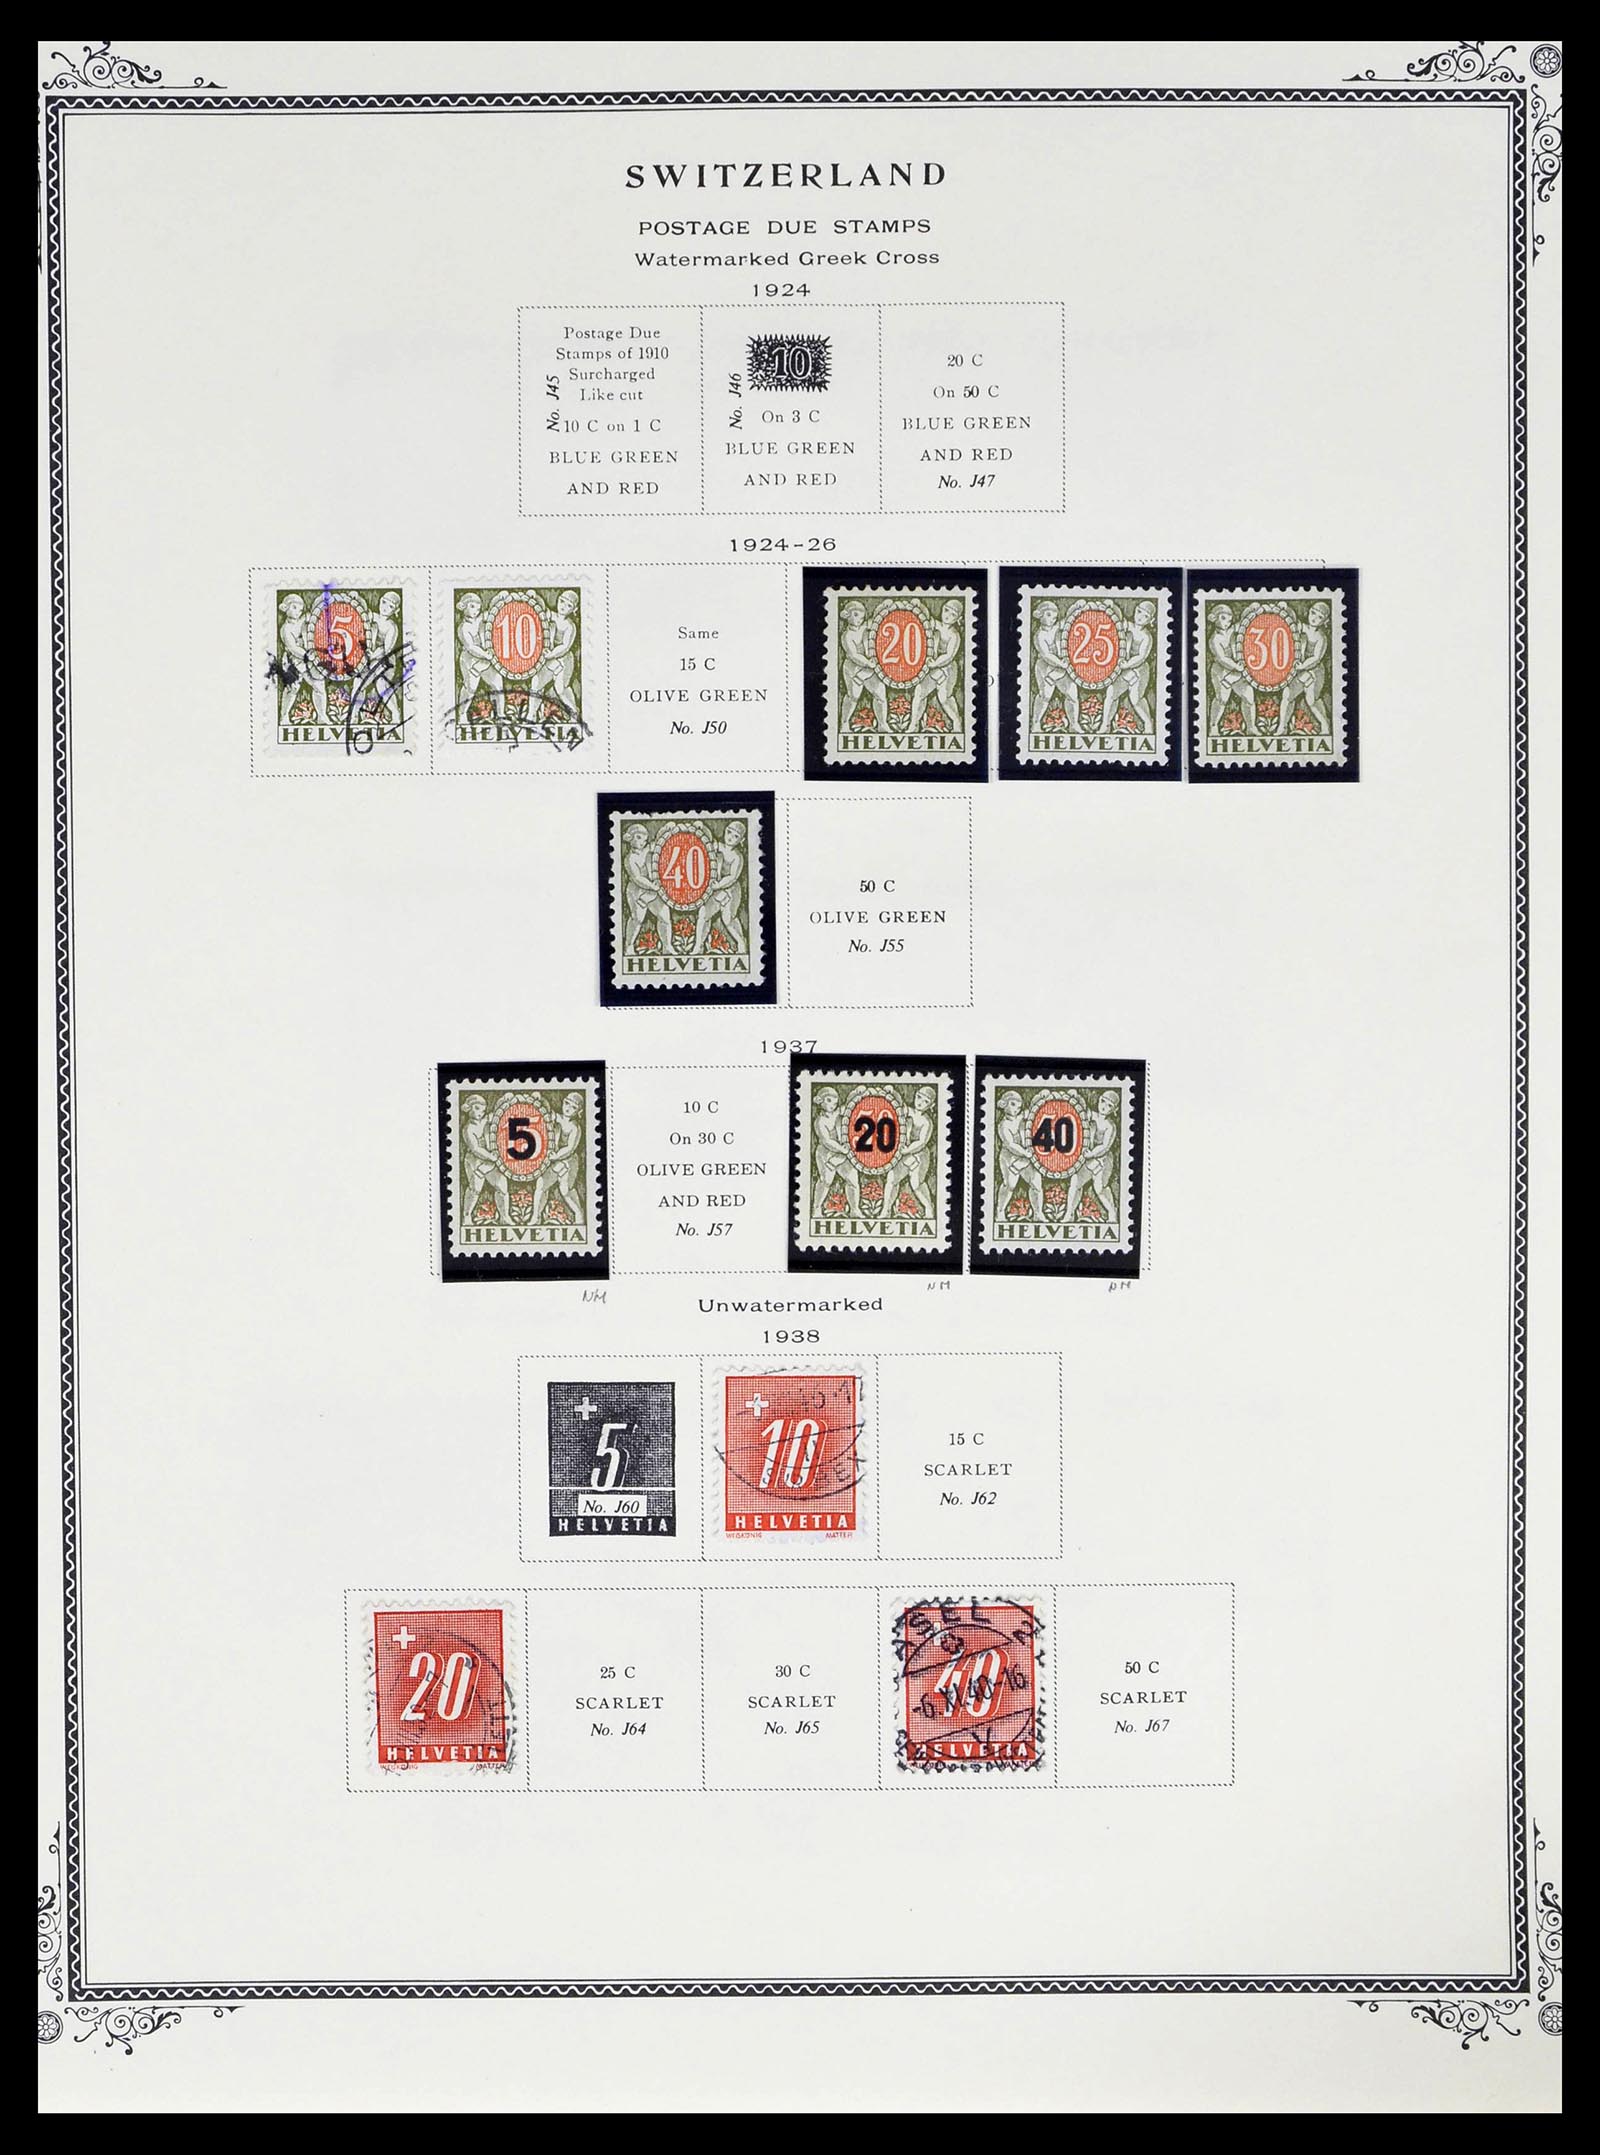 39178 0229 - Stamp collection 39178 Switzerland 1850-1989.